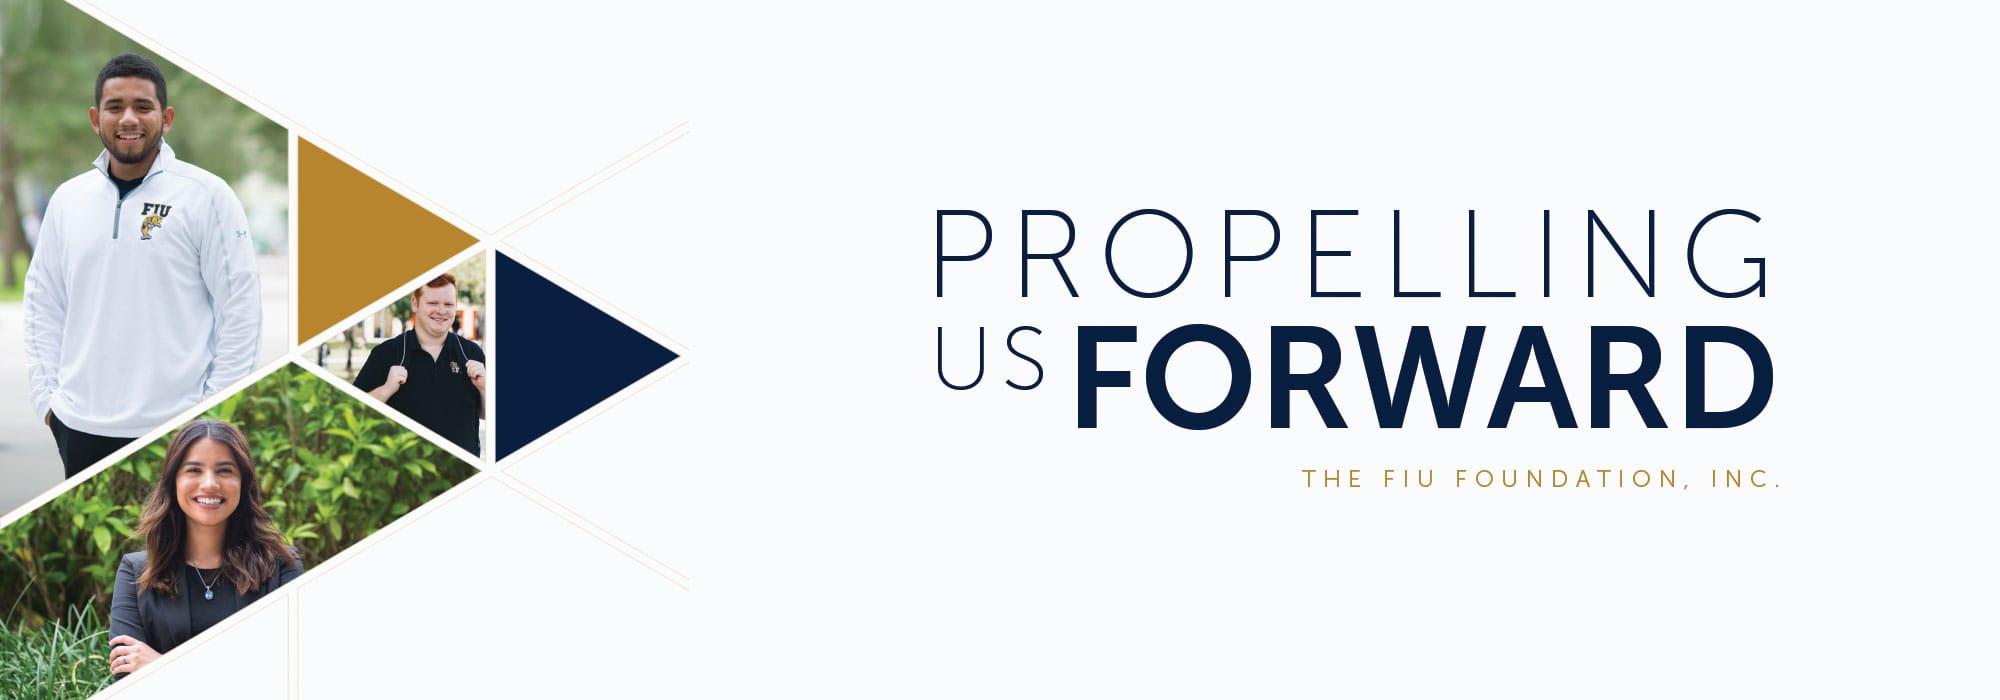 Propelling Us Forward - The FIU Foundation, Inc.